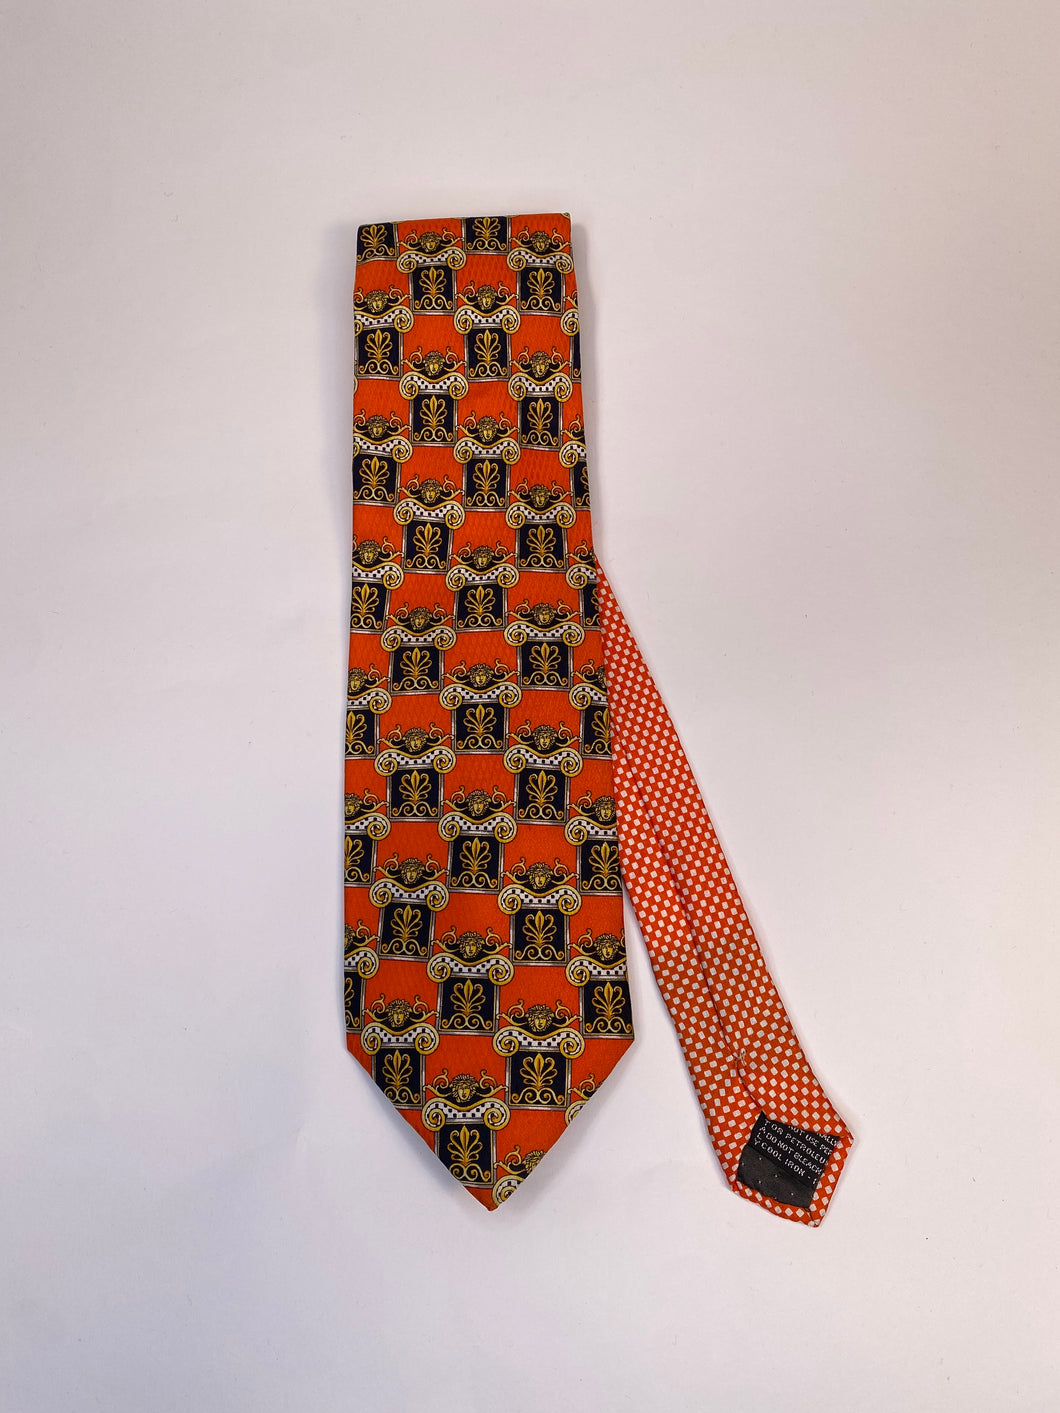 1990s Gianni Versace necktie orange